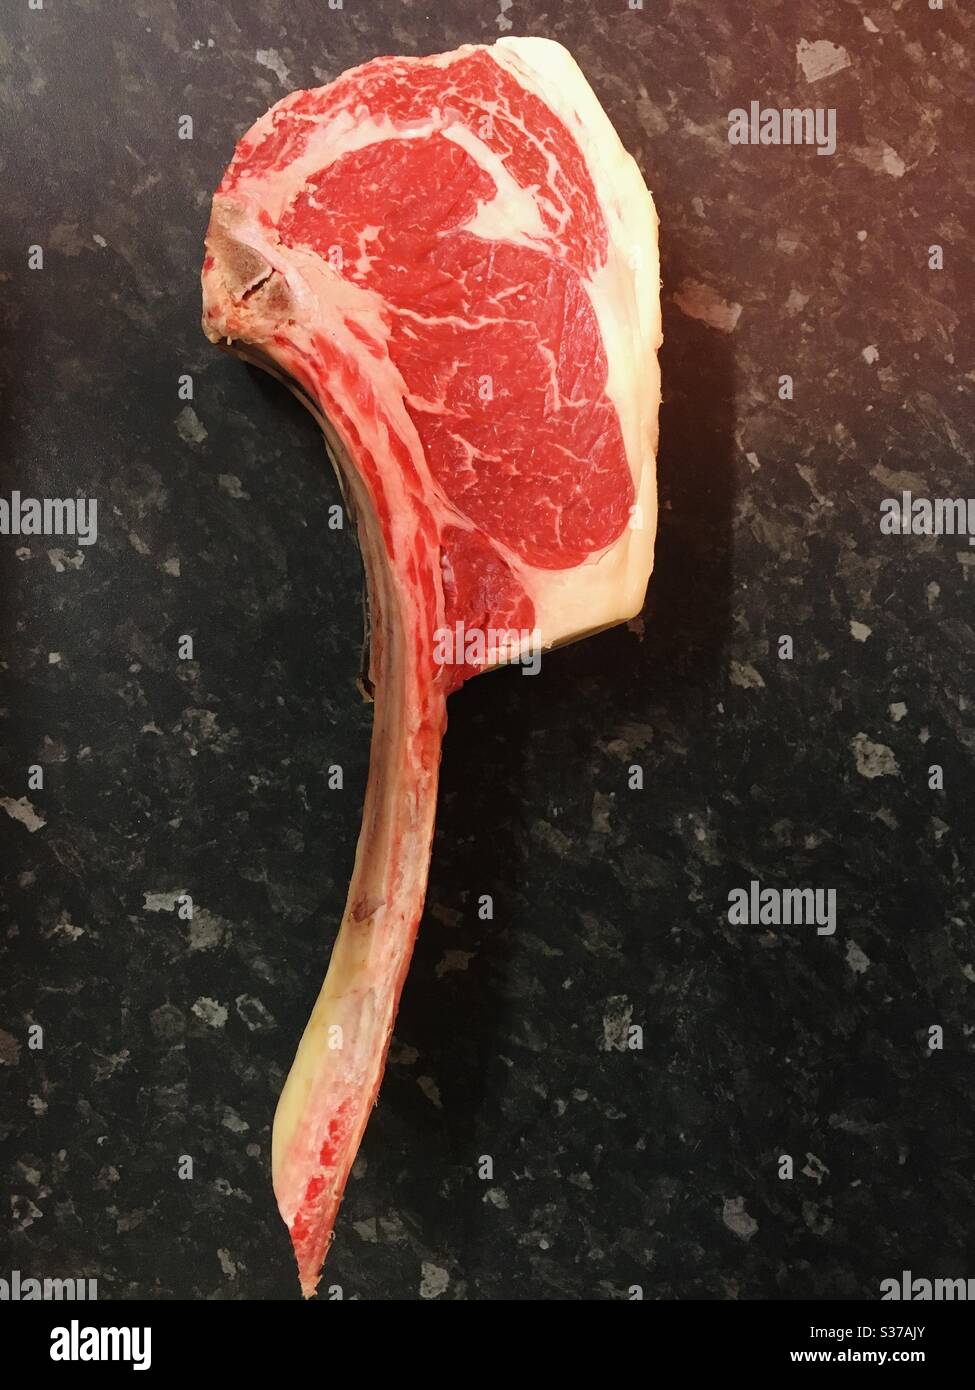 Tomahawk beef steak on a dark worktop - raw and uncooked Stock Photo